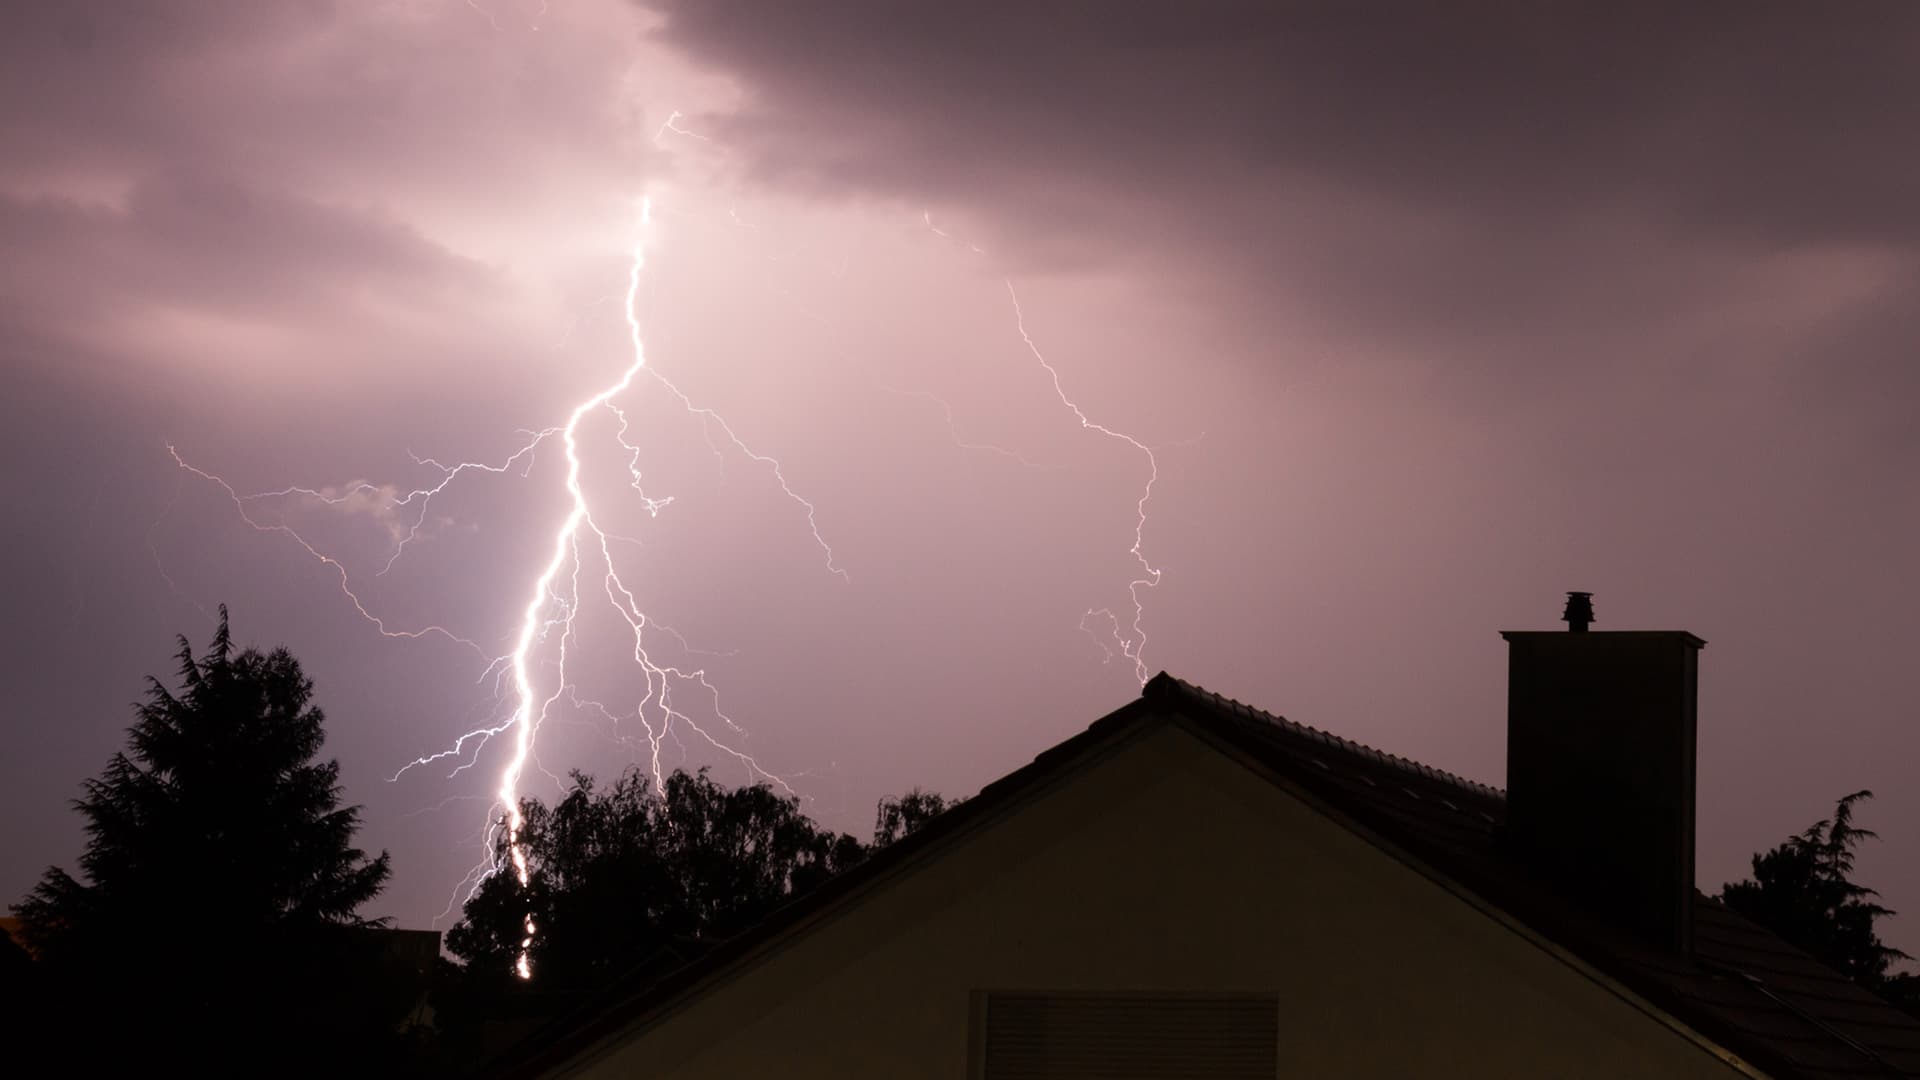 Lightning strikes near a house